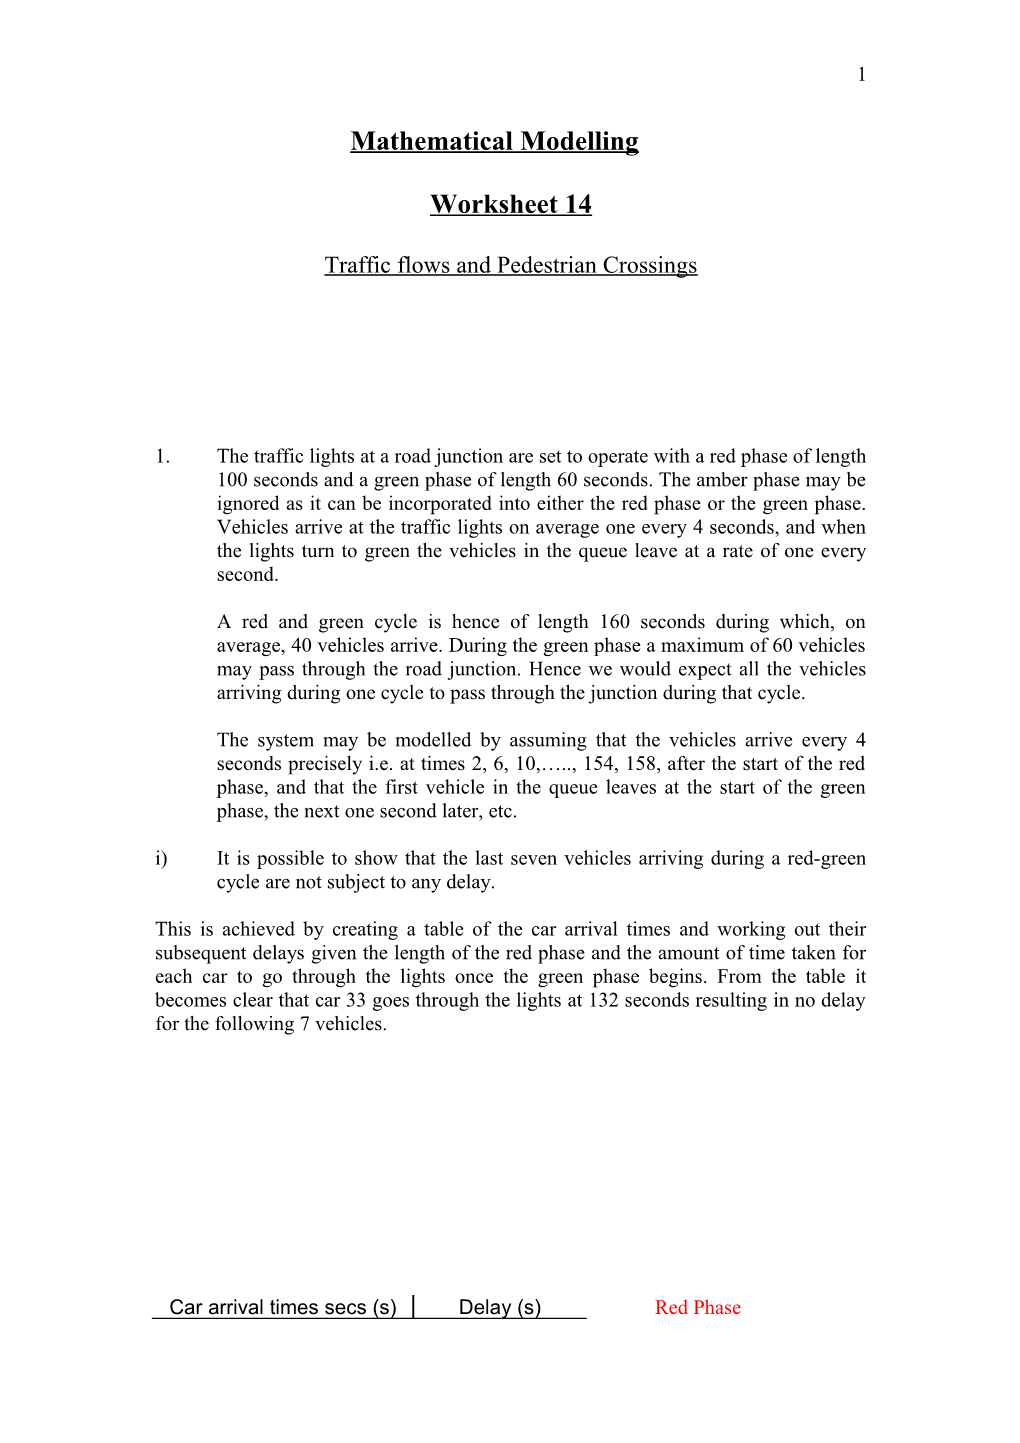 Traffic Flows and Pedestrian Crossings